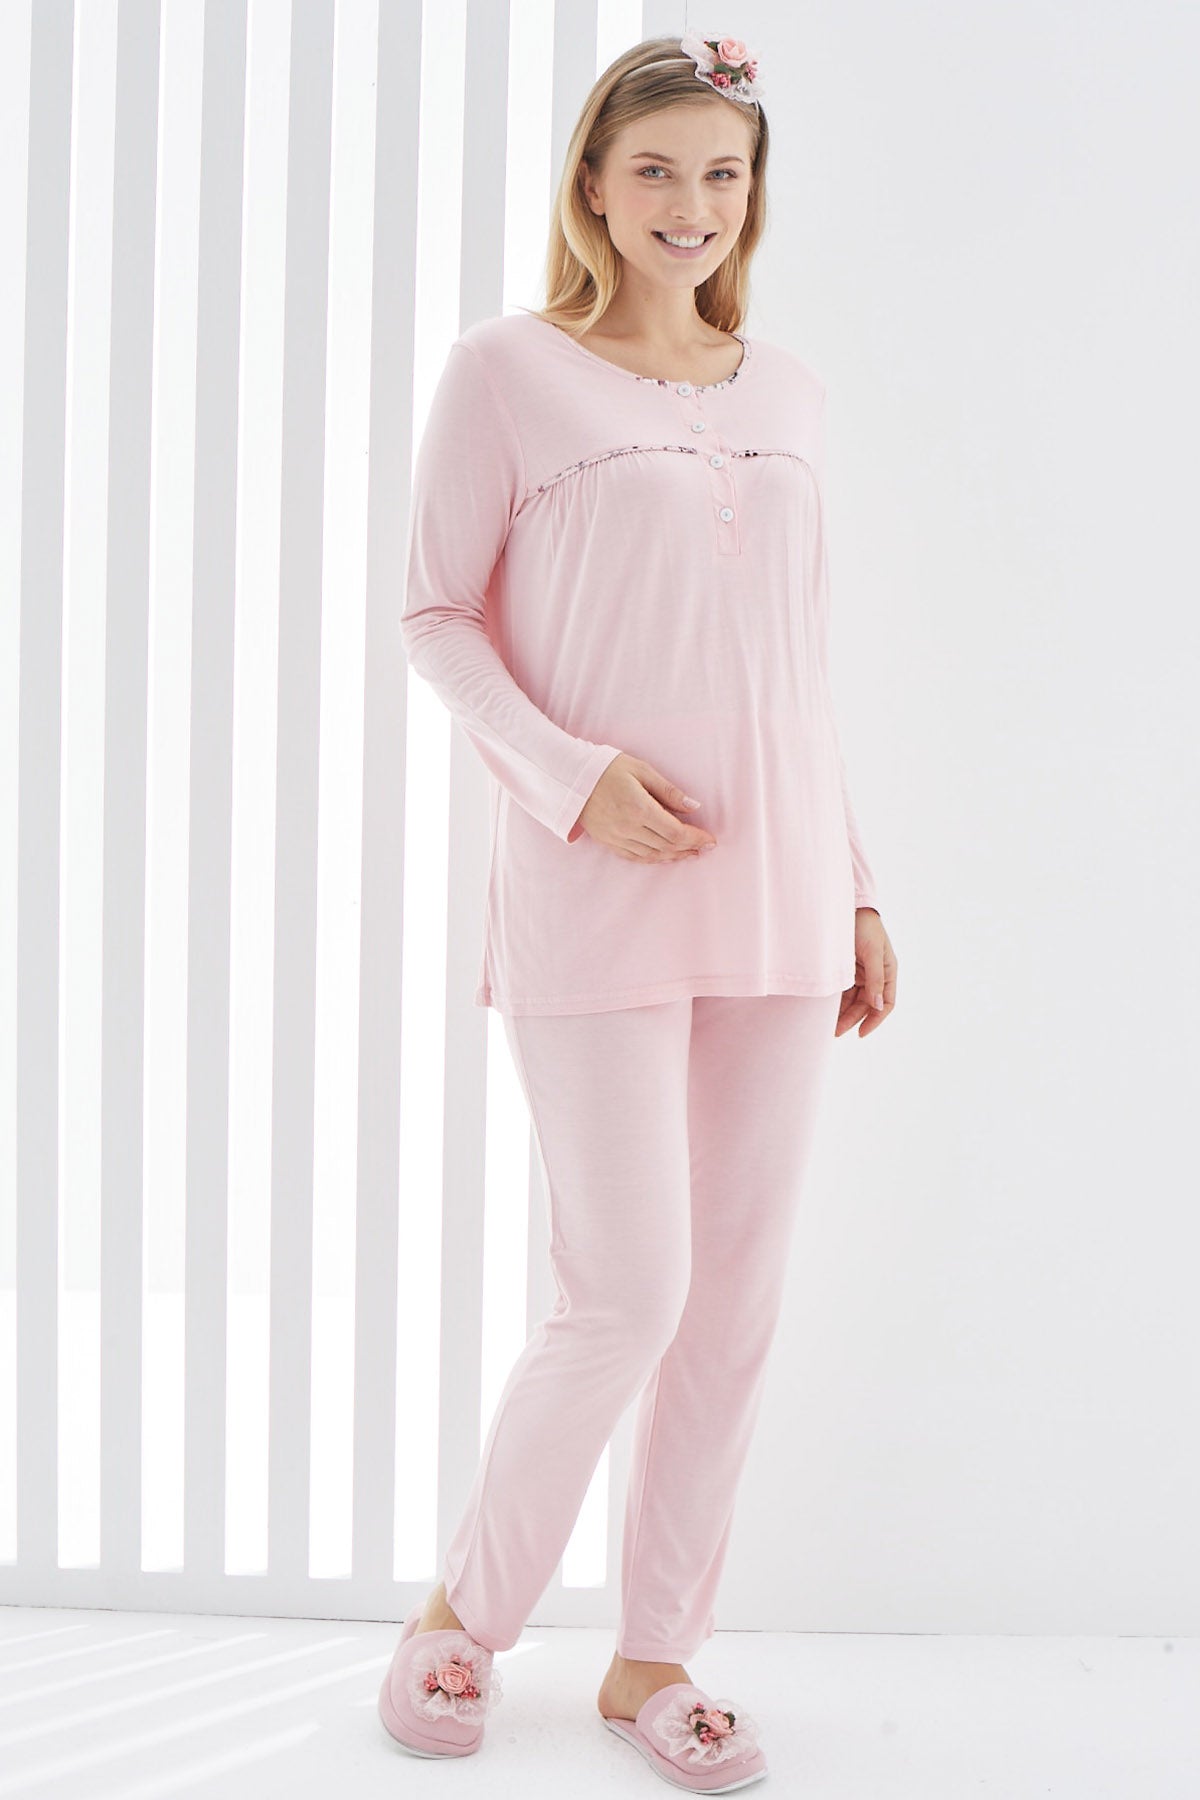 Shopymommy 1168 Stripe Maternity & Nursing Pajamas Pink